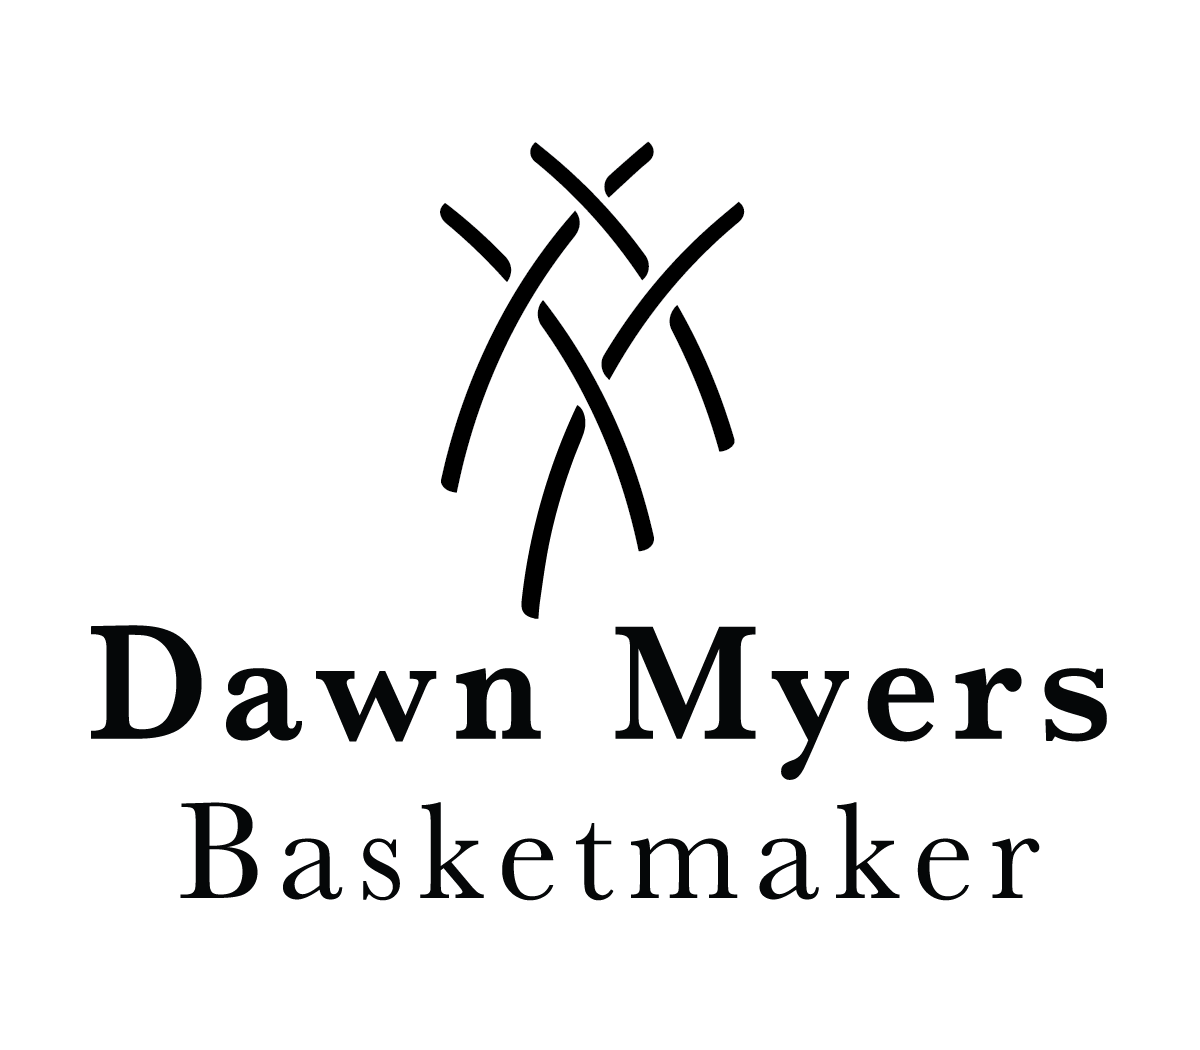 Dawn Myers Basketmaker